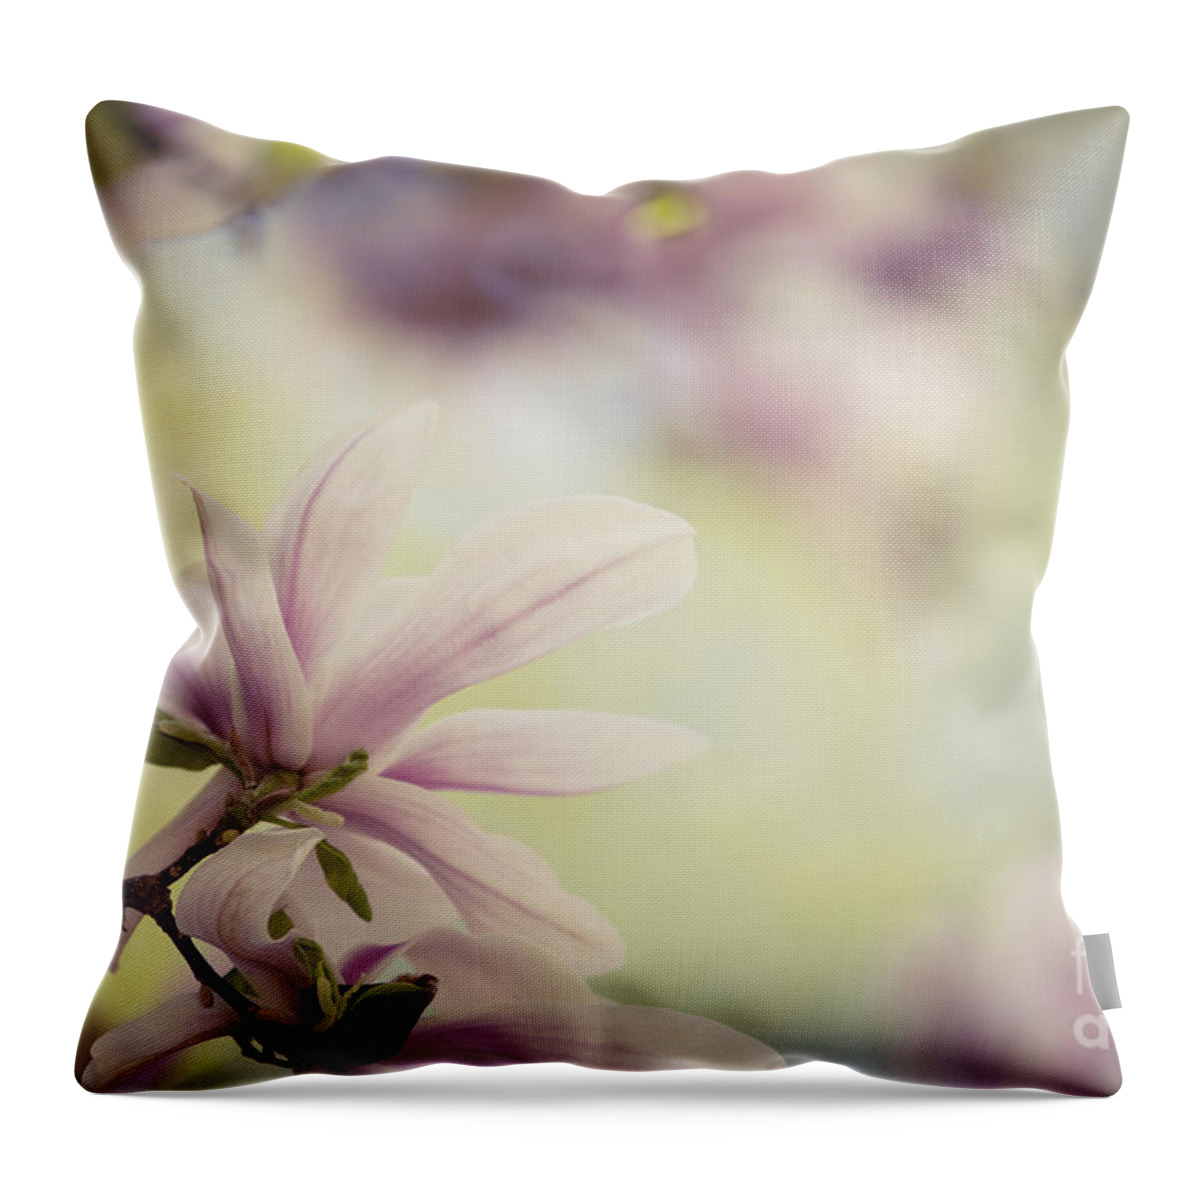 Magnolia Throw Pillow featuring the photograph Magnolia Flowers #4 by Nailia Schwarz